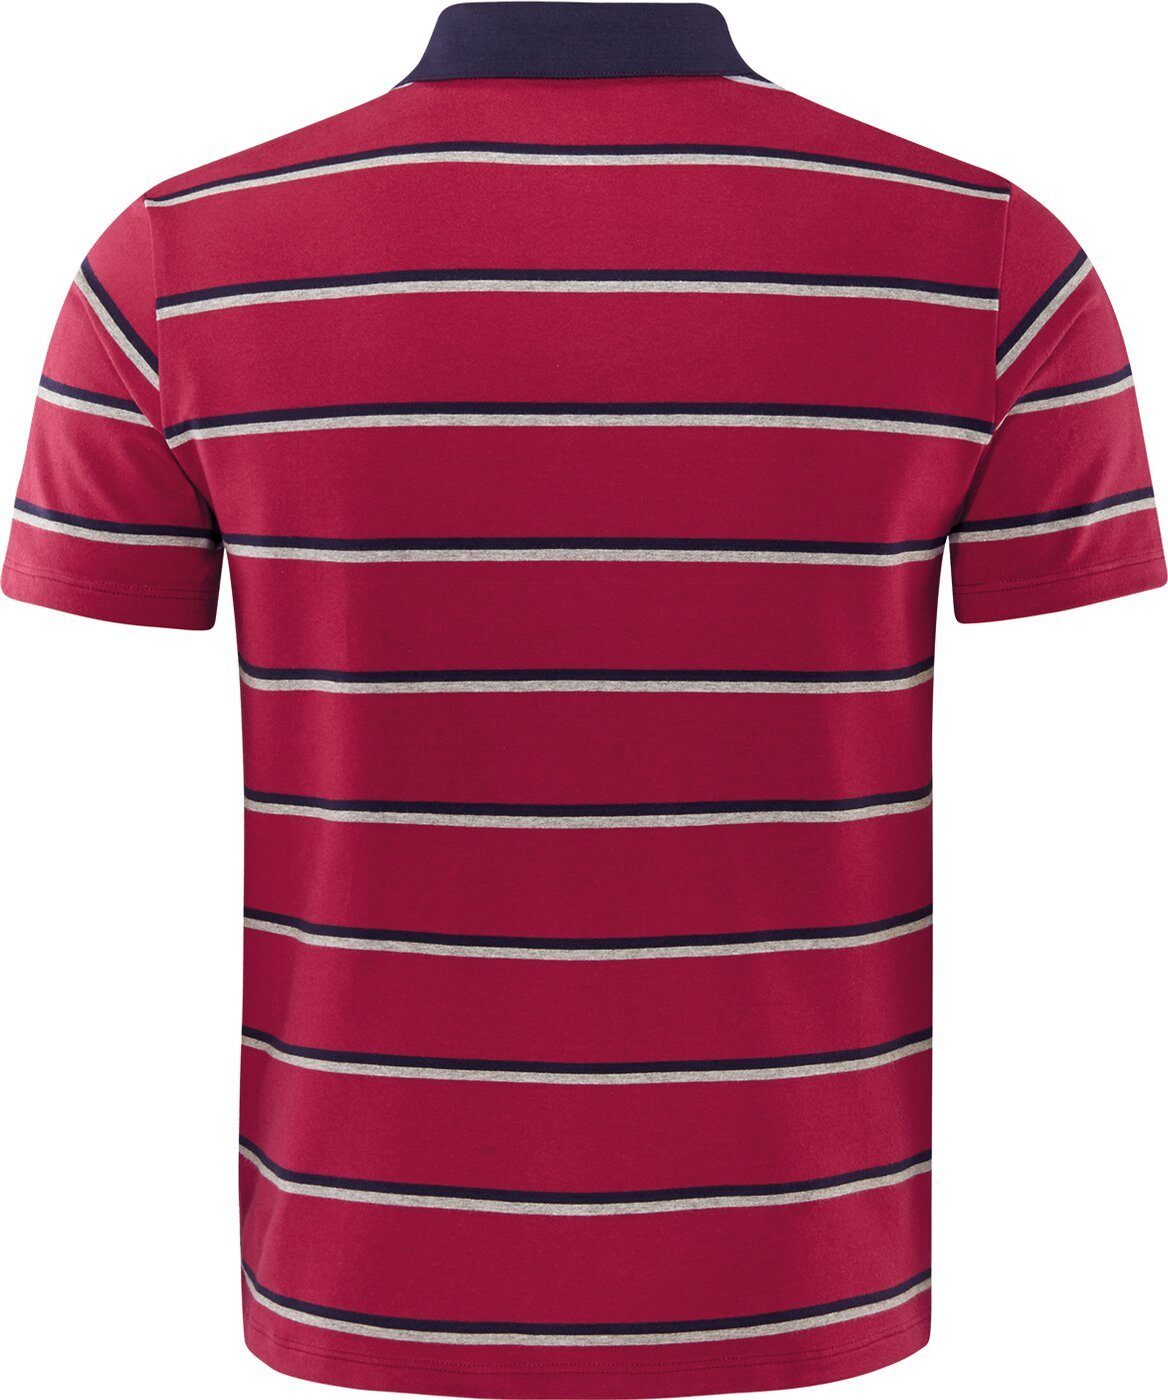 SCHNEIDER MICELM-Polo Poloshirt DUNKELBLAU/REDWINE Sportswear